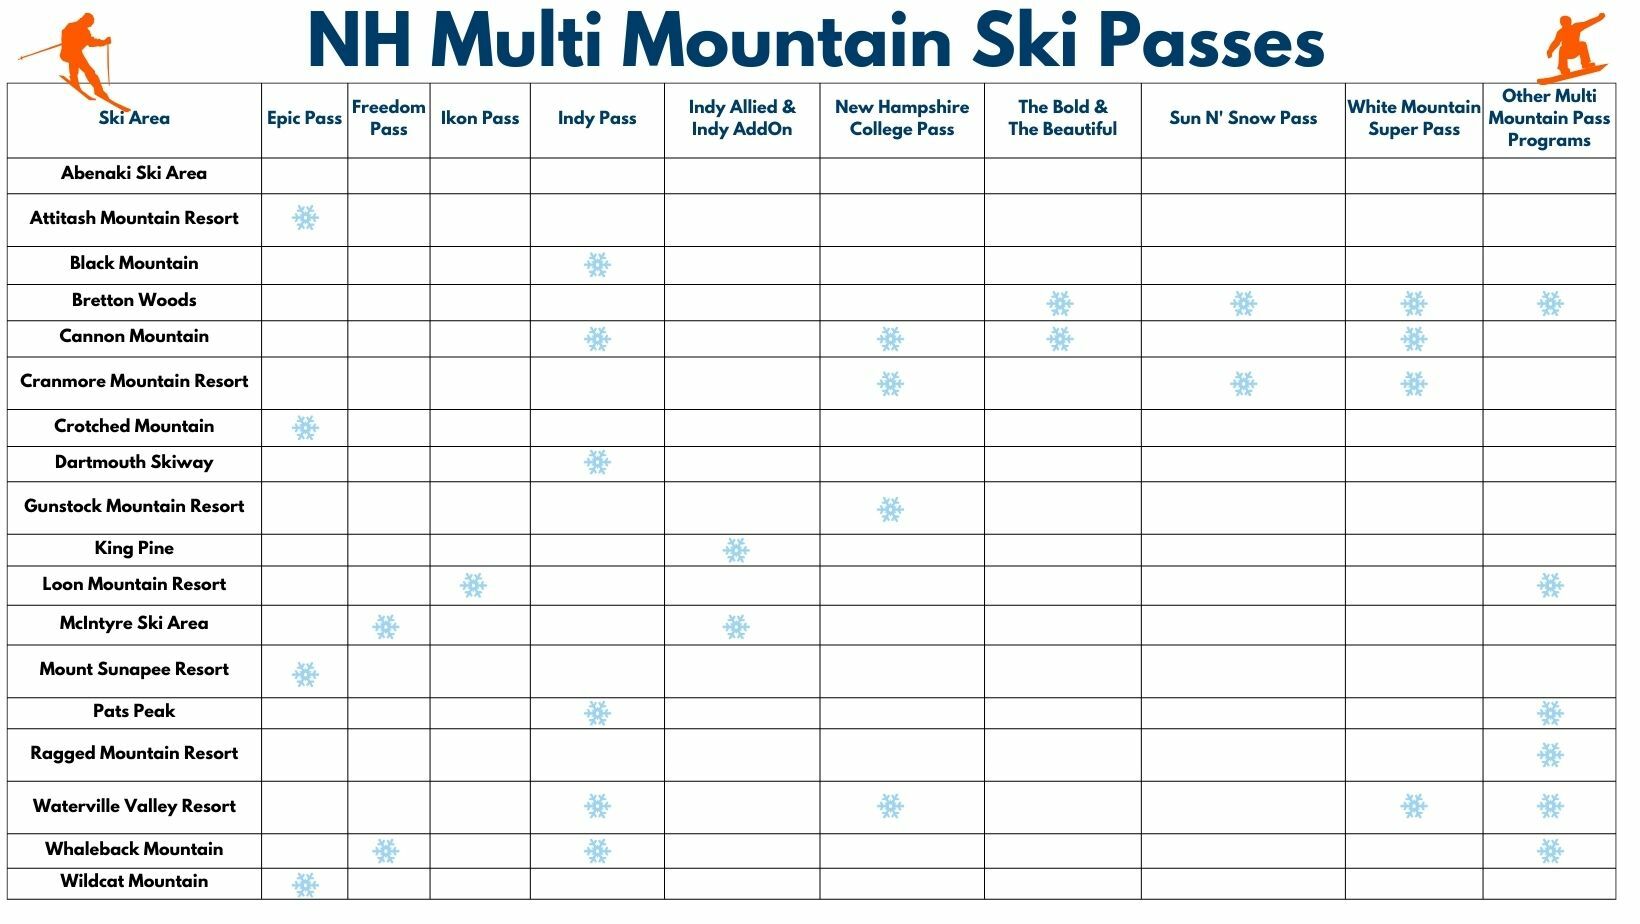 NH Multi Mountain Ski Passes